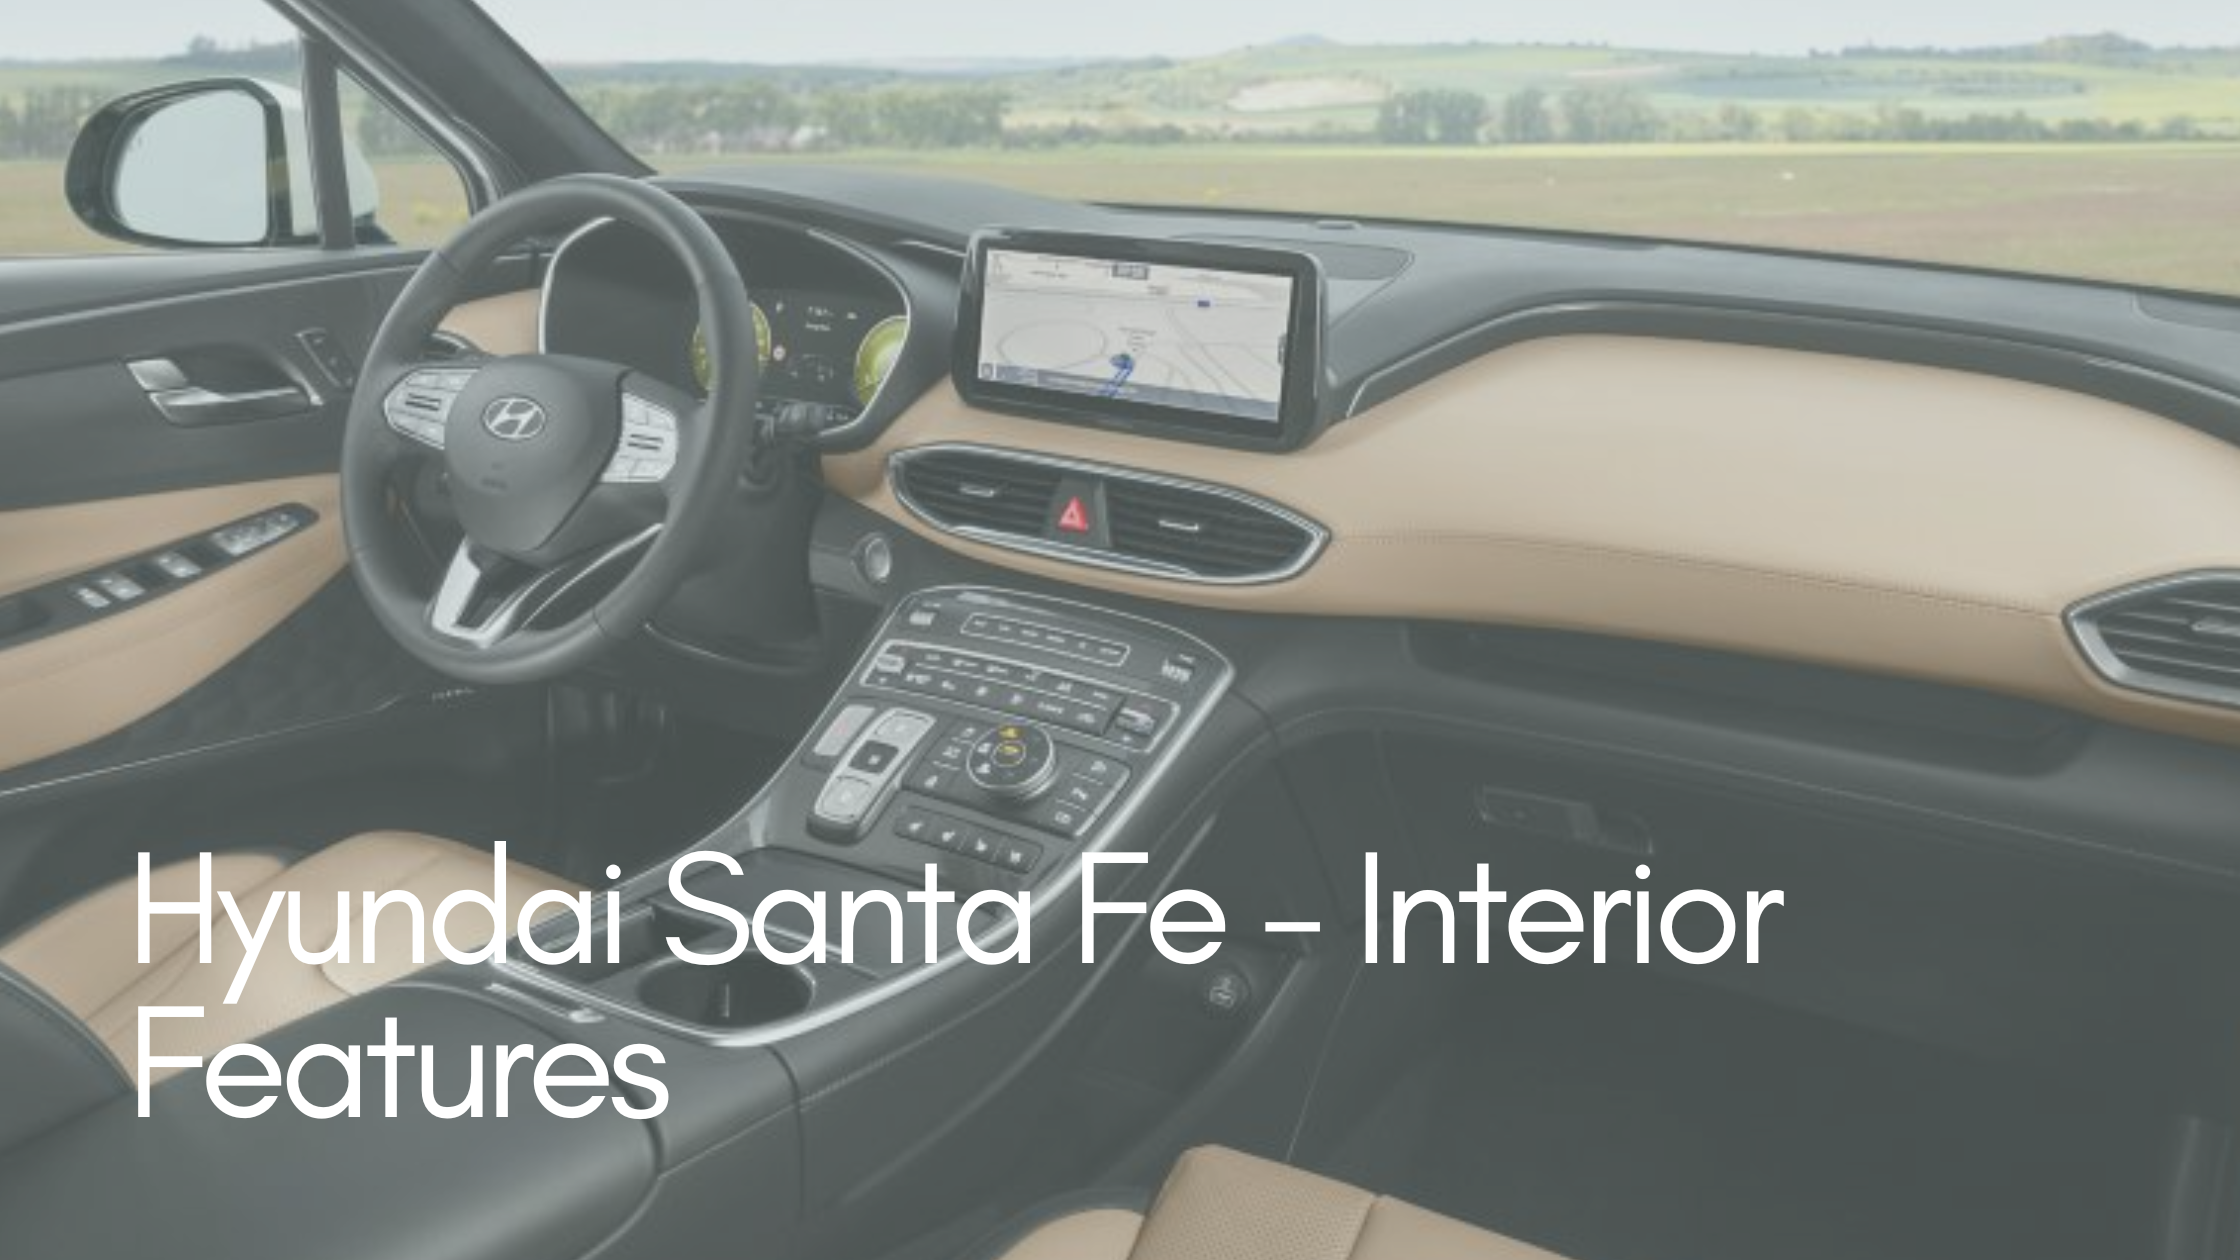 Hyundai Santa Fe Interior: Safety, Technology, and Comfort